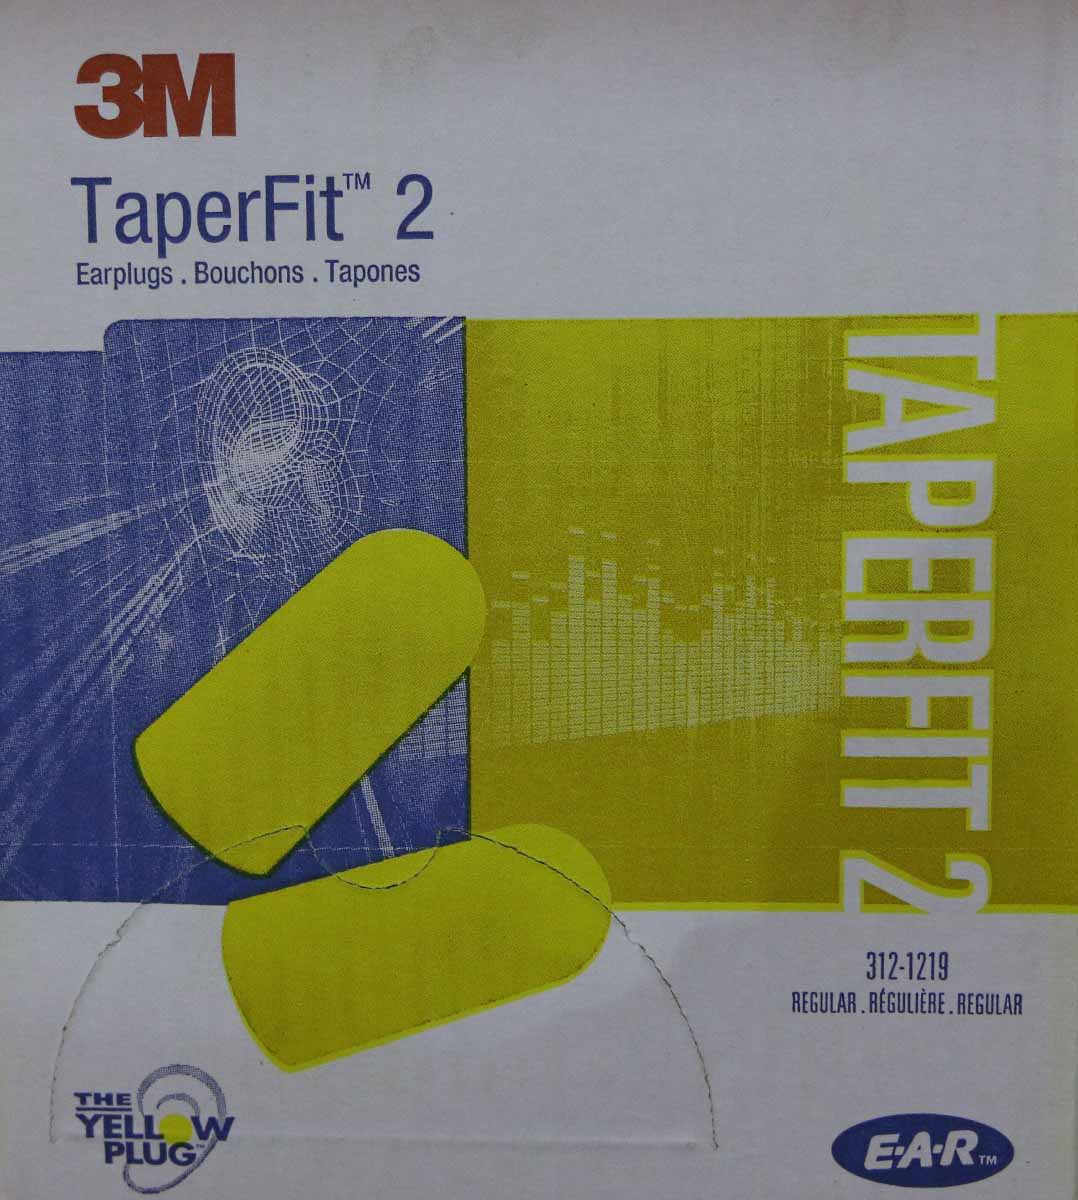 3M TaperFit2 Single-Use Earplugs Box